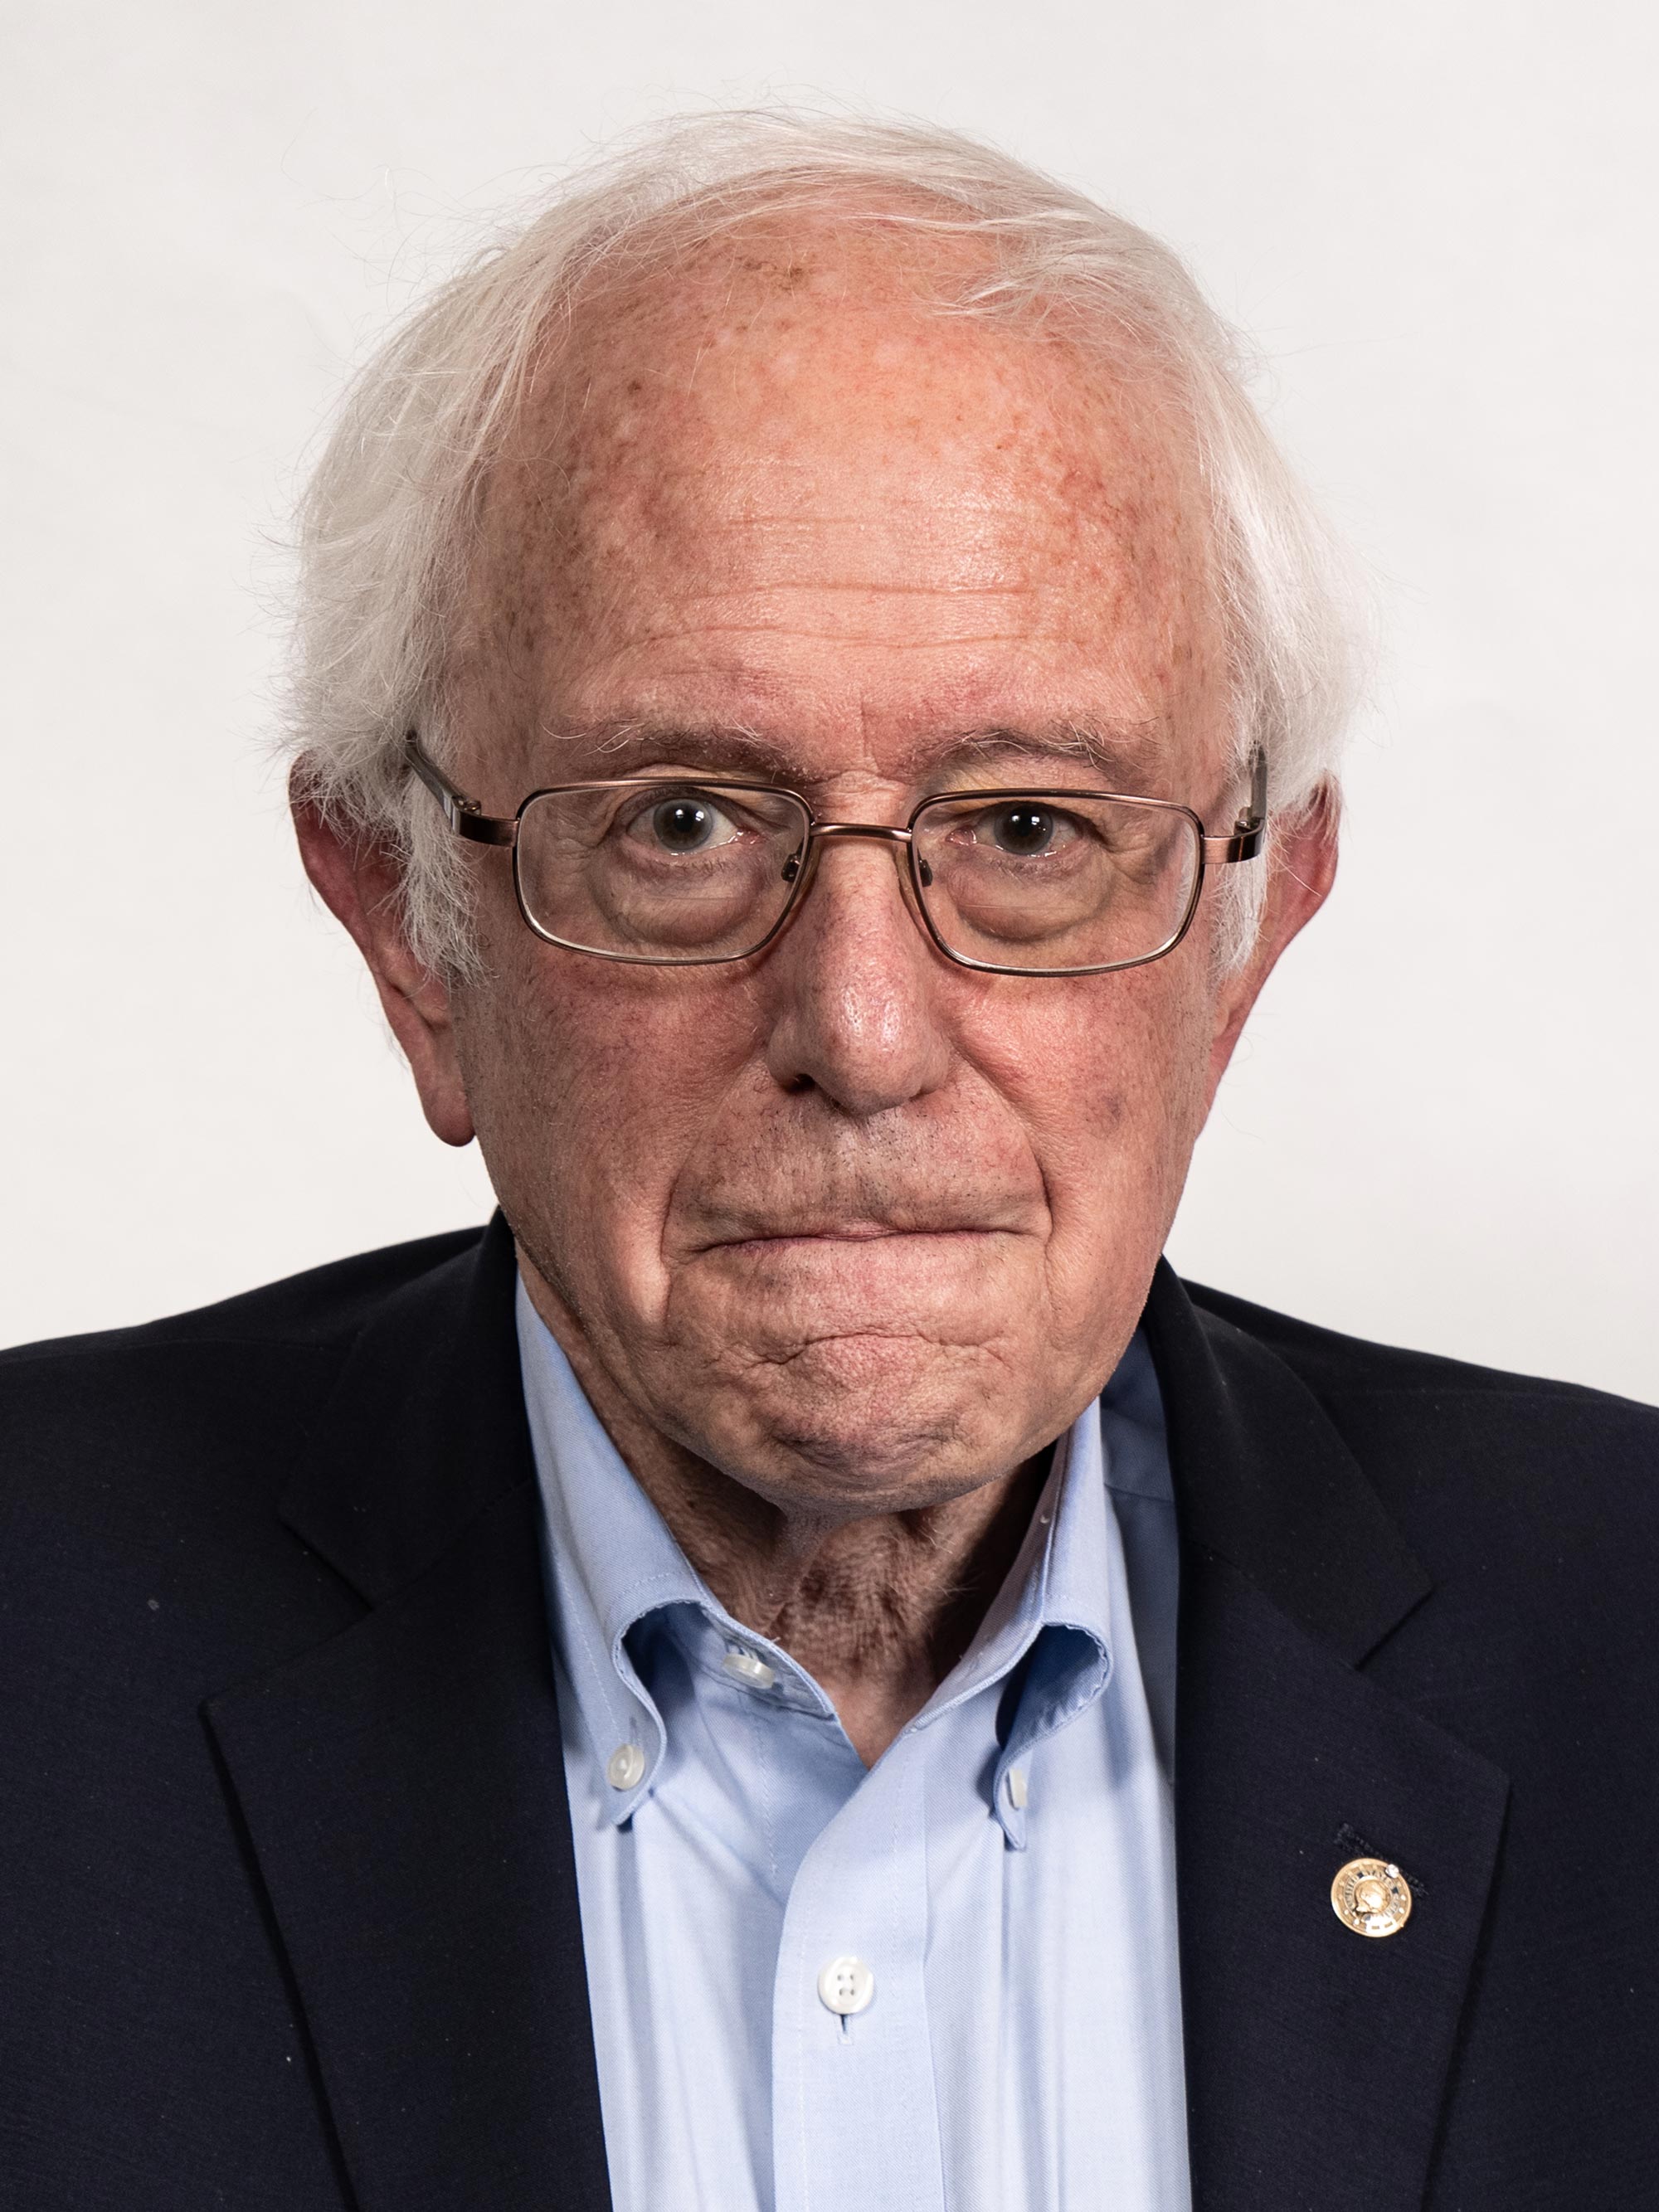 Close up of Bernie Sanders